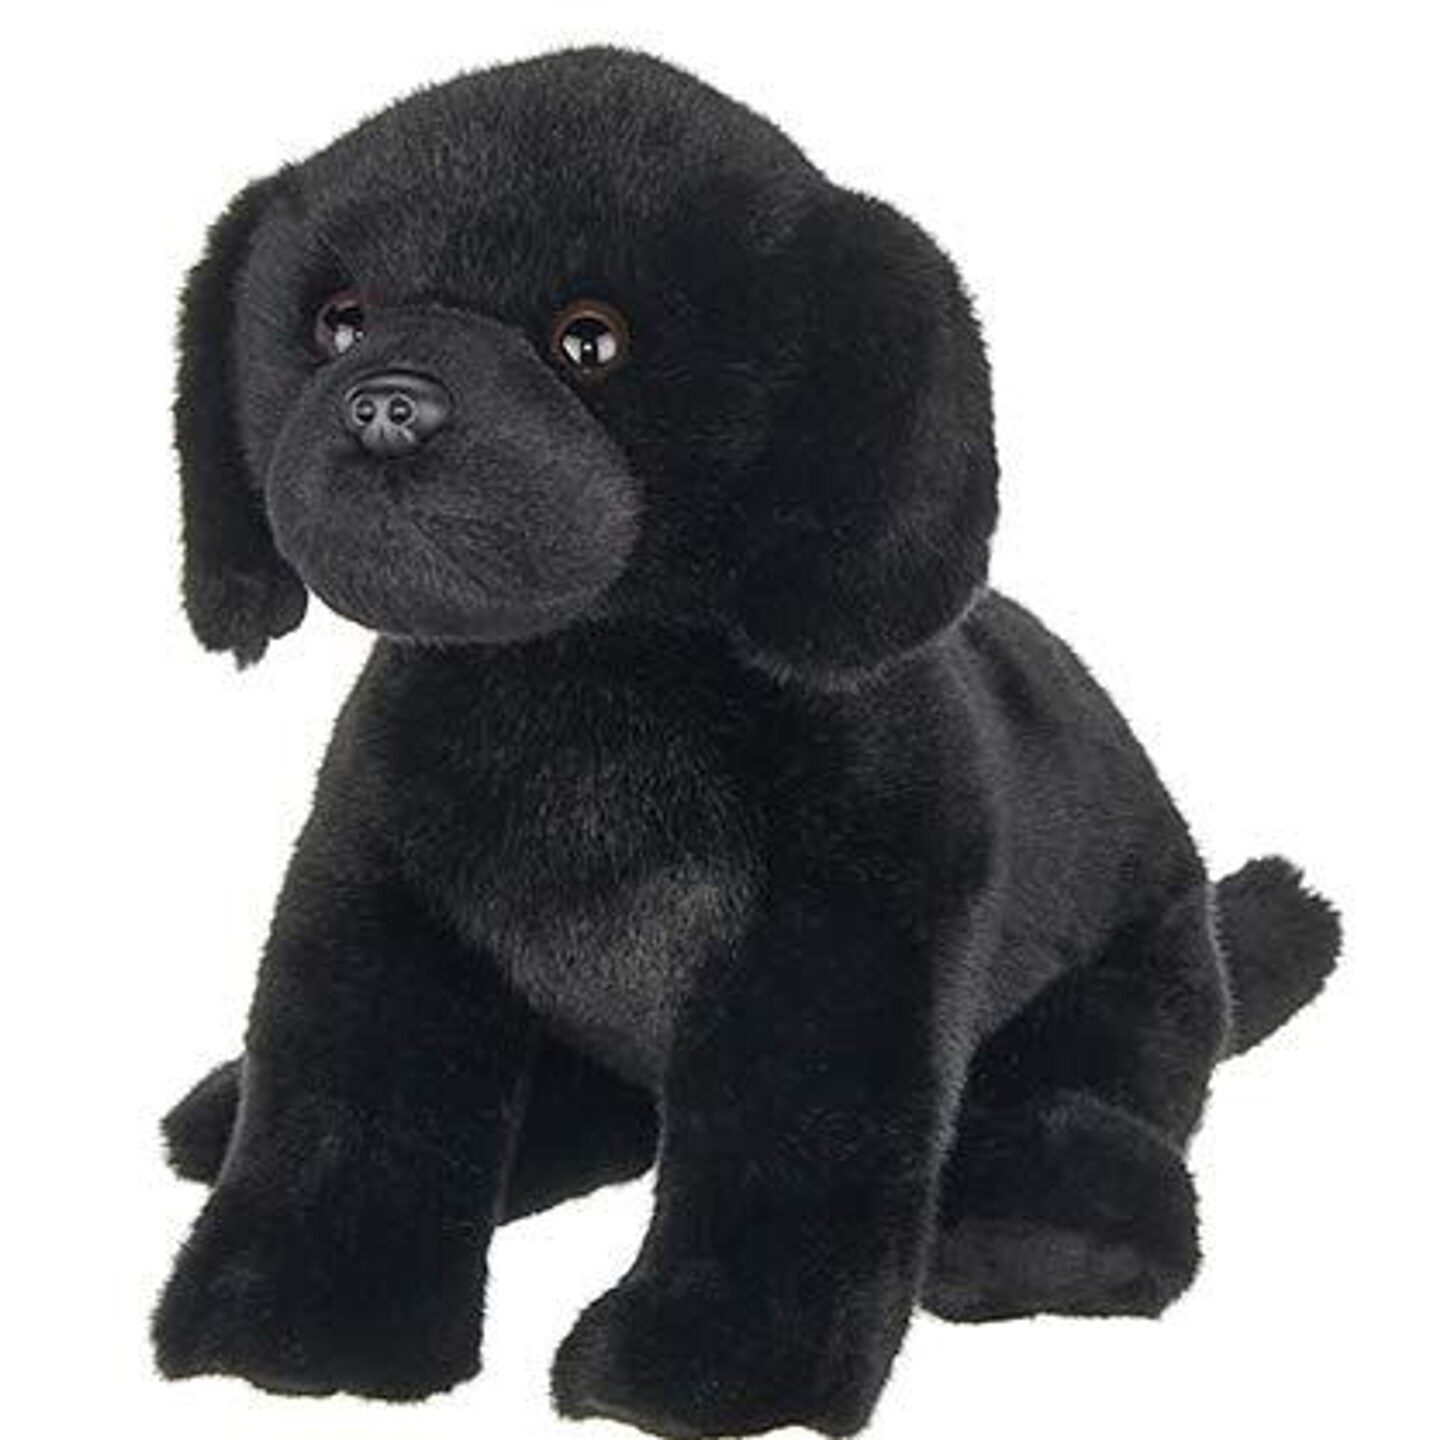 Bearington Chase The Labrador Black Dog Plush, 13 Inch Black Lab Stuffed Animal